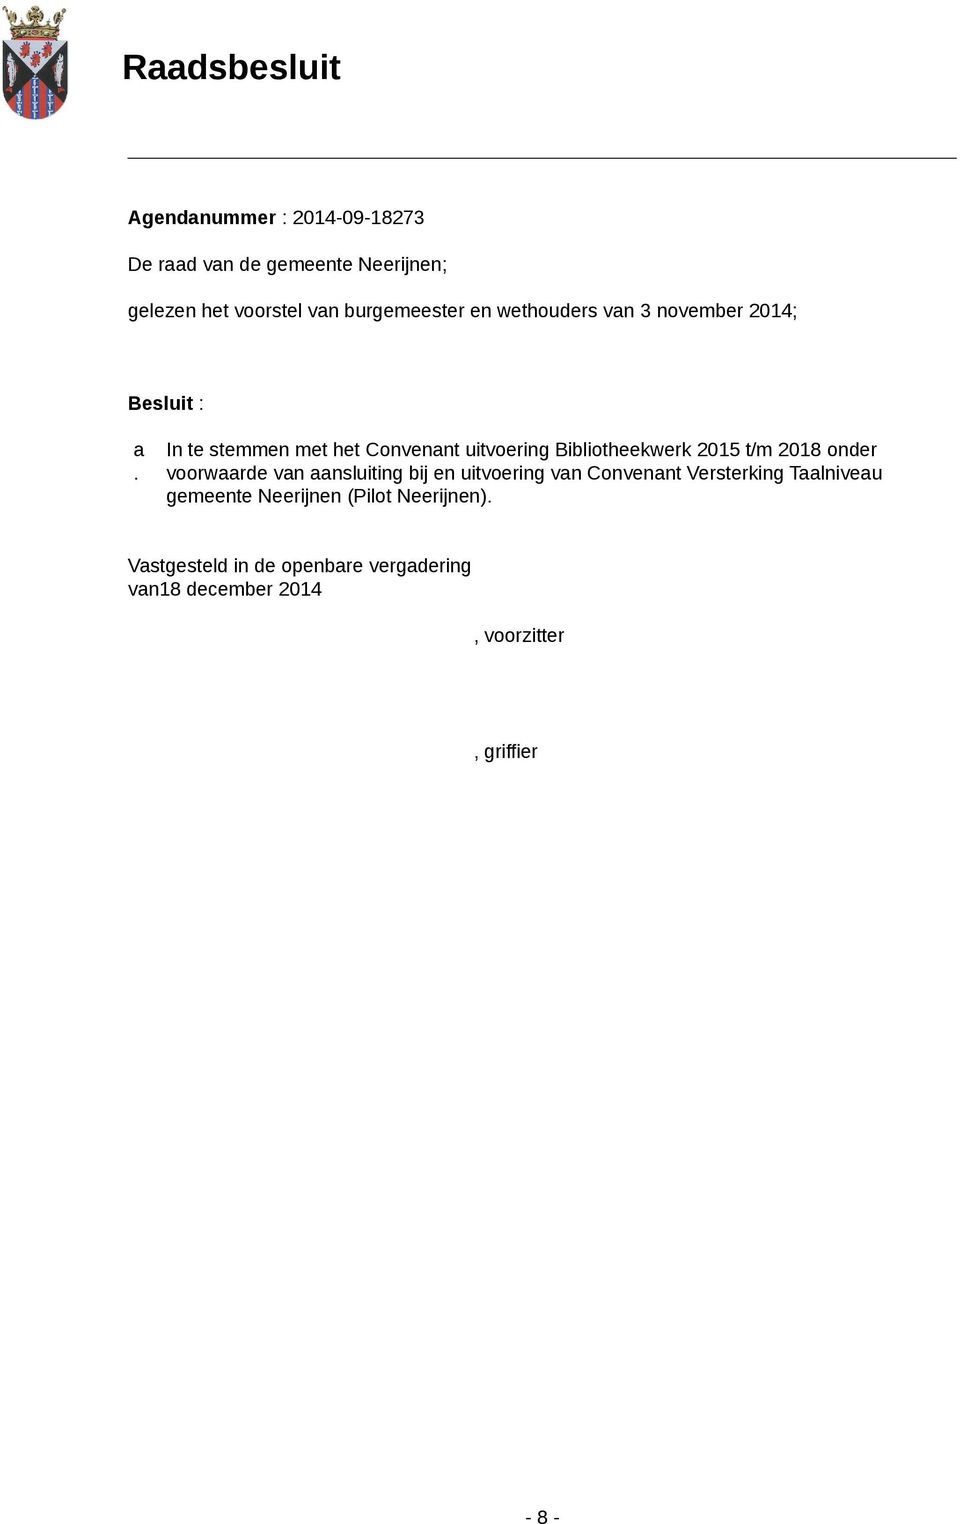 In te stemmen met het Convenant uitvoering Bibliotheekwerk 2015 t/m 2018 onder voorwaarde van